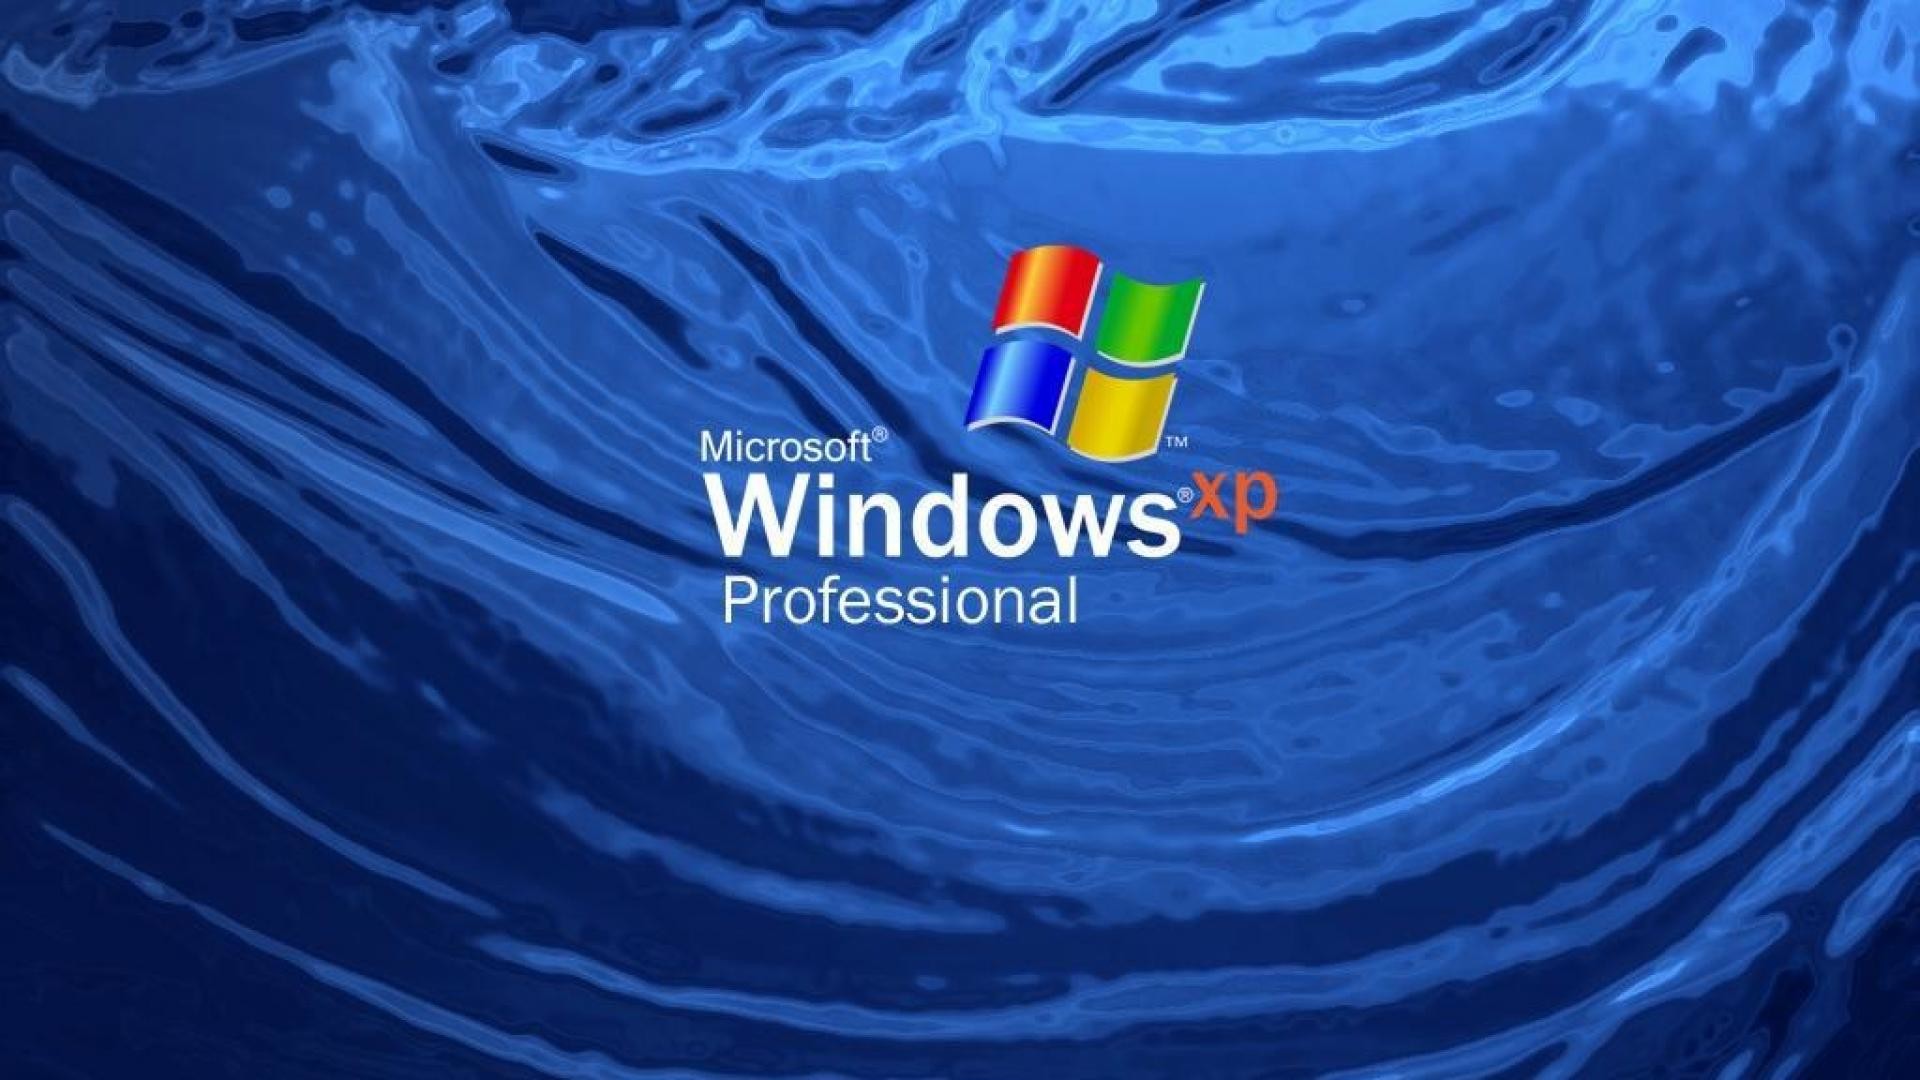 Wallpaper Windows XP, Bliss, Windows 10 images for desktop, section  текстуры - download